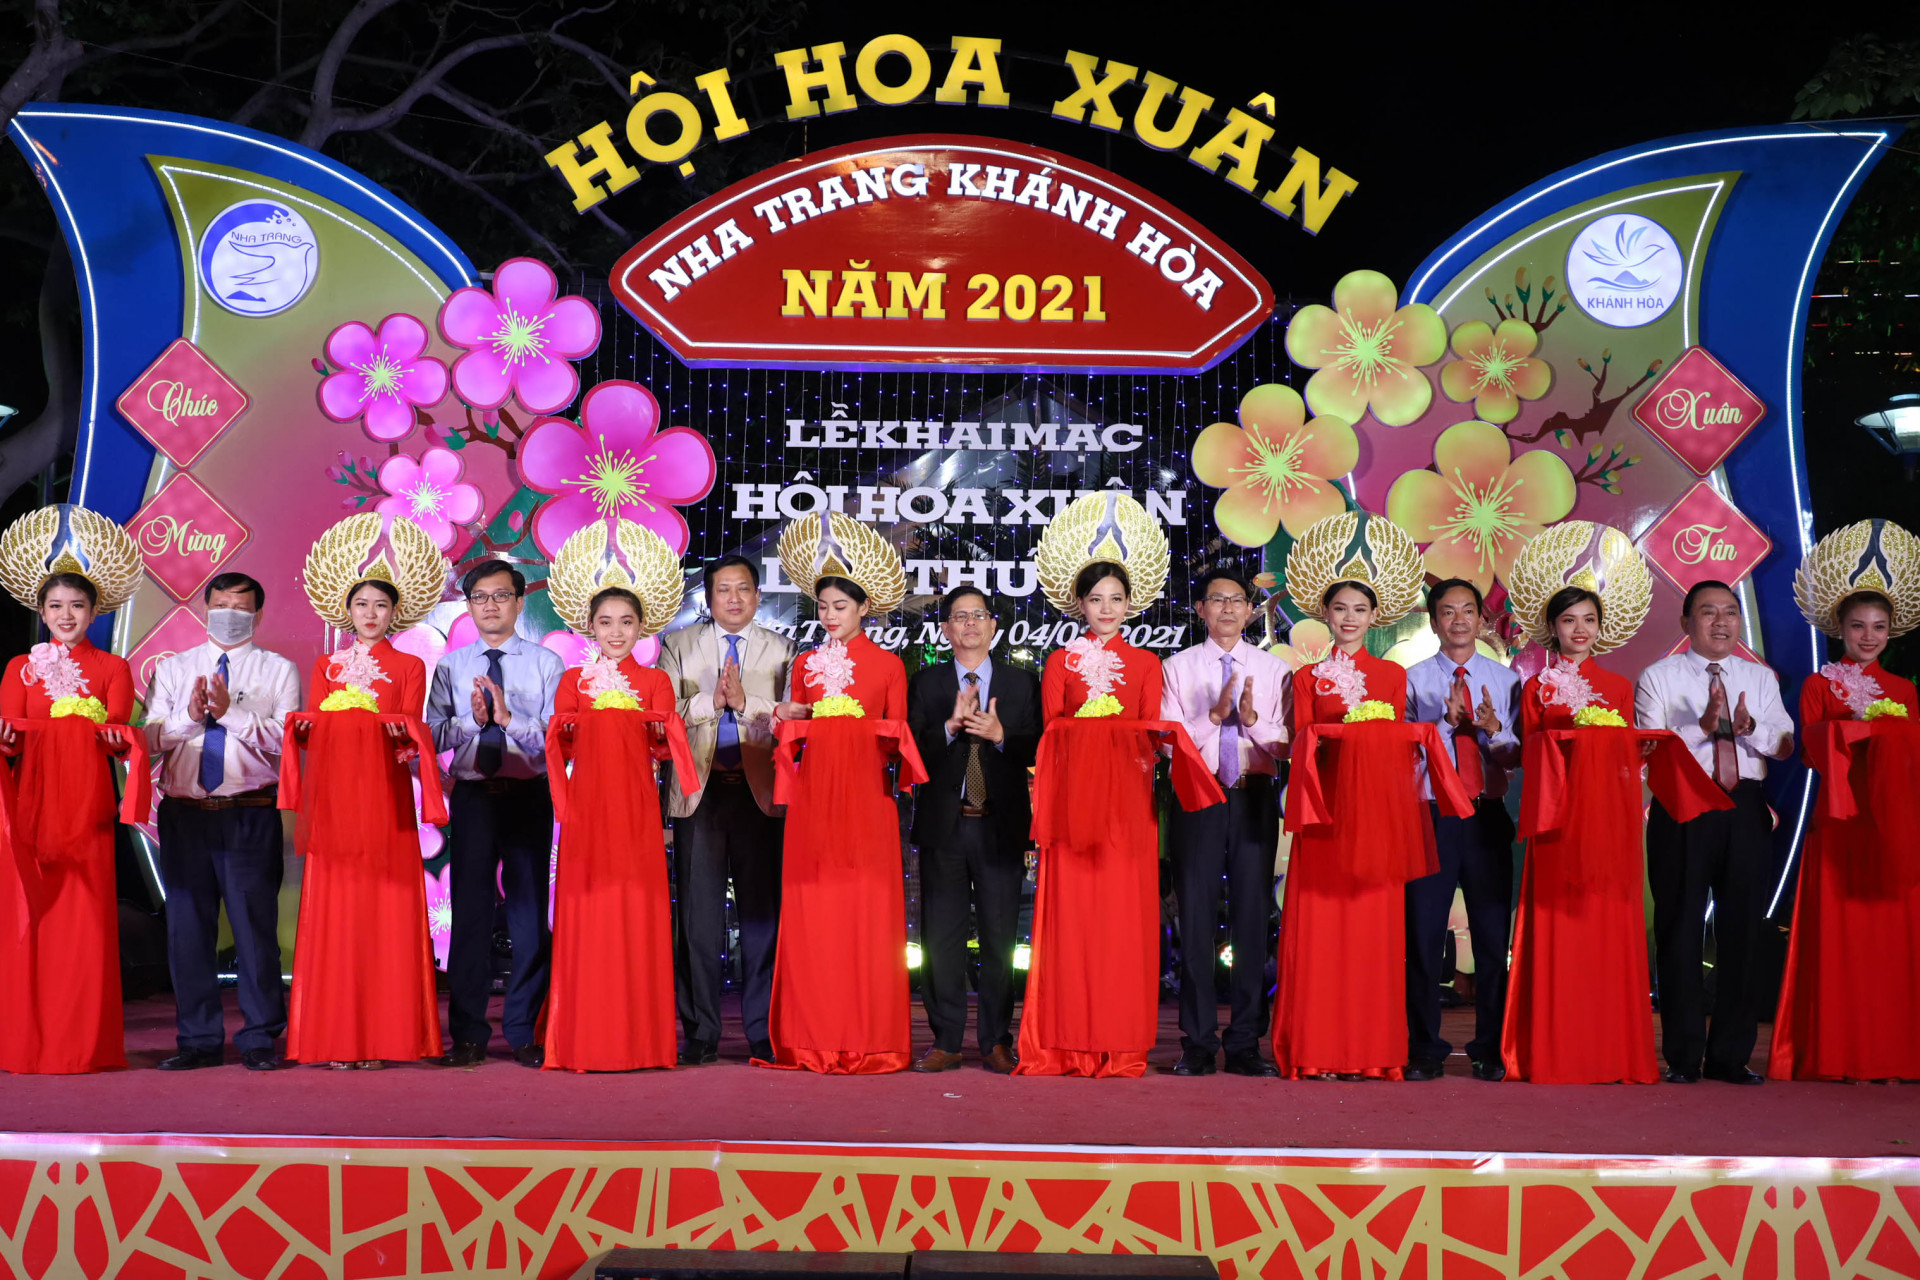 Representatives cutting ribbon to open Nha Trang-Khanh Hoa Spring Flower Festival 2021